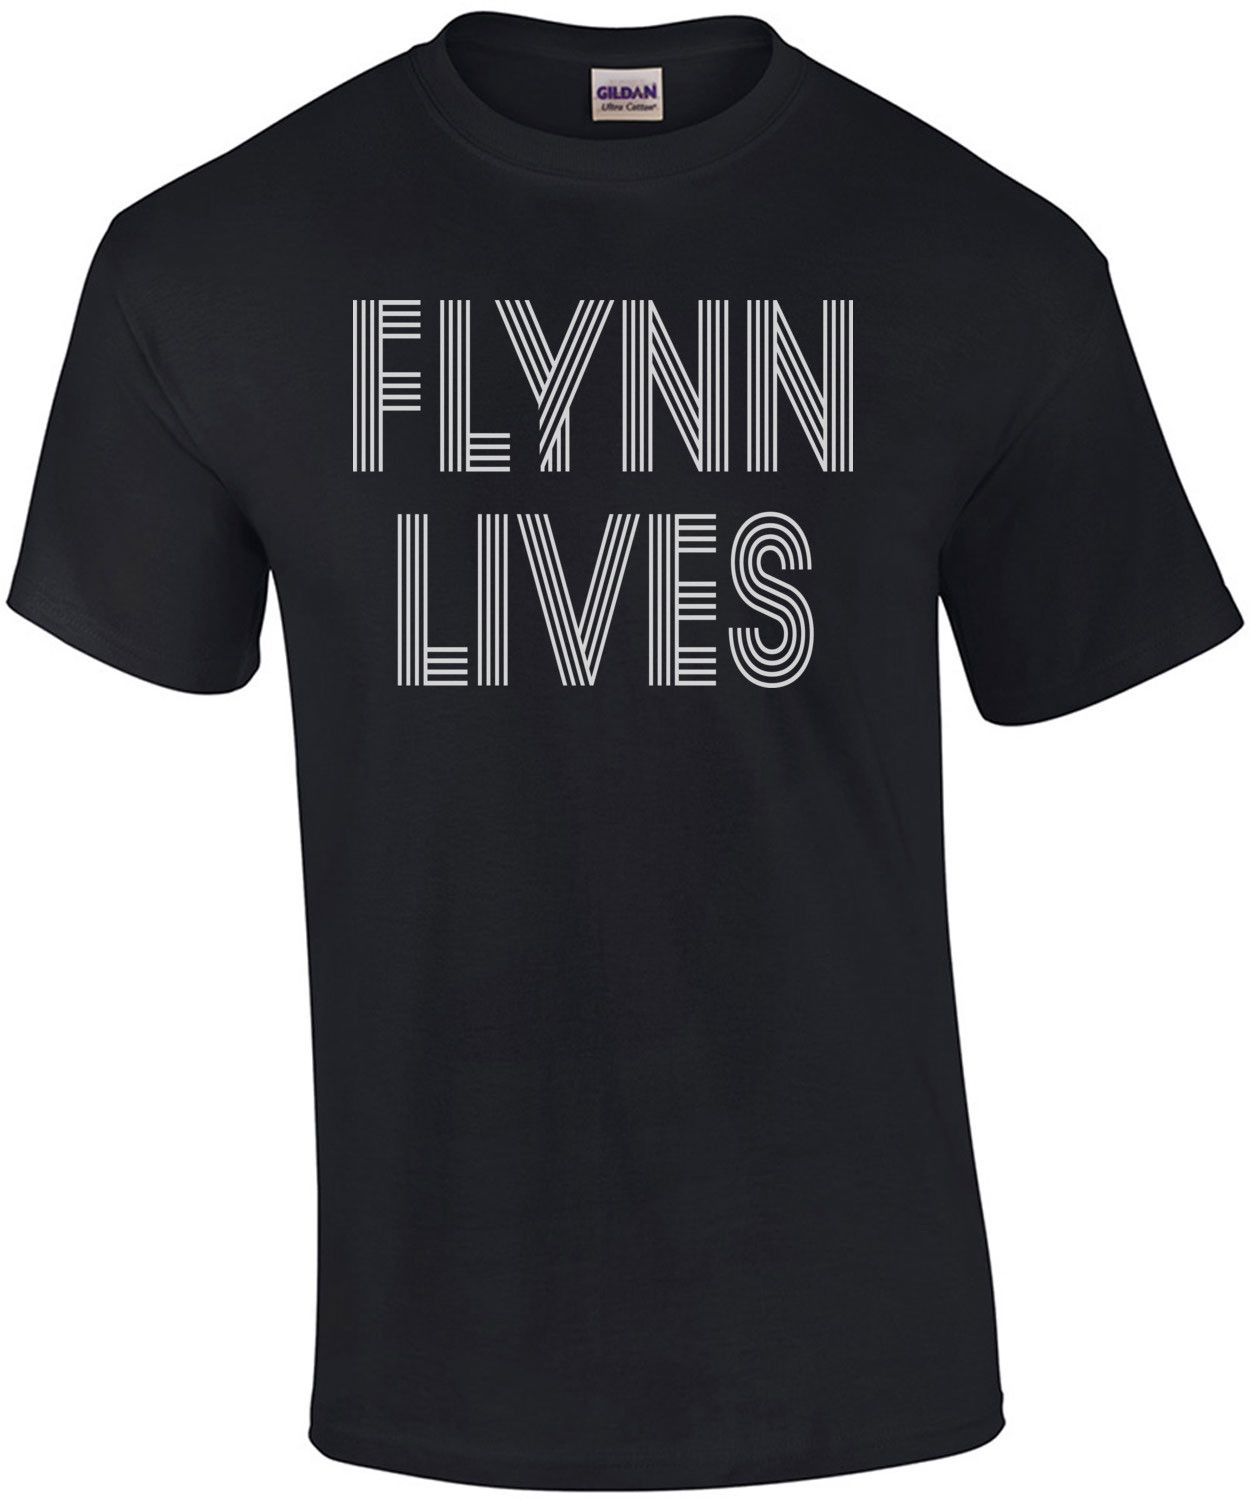 Flynn Lives - Tron